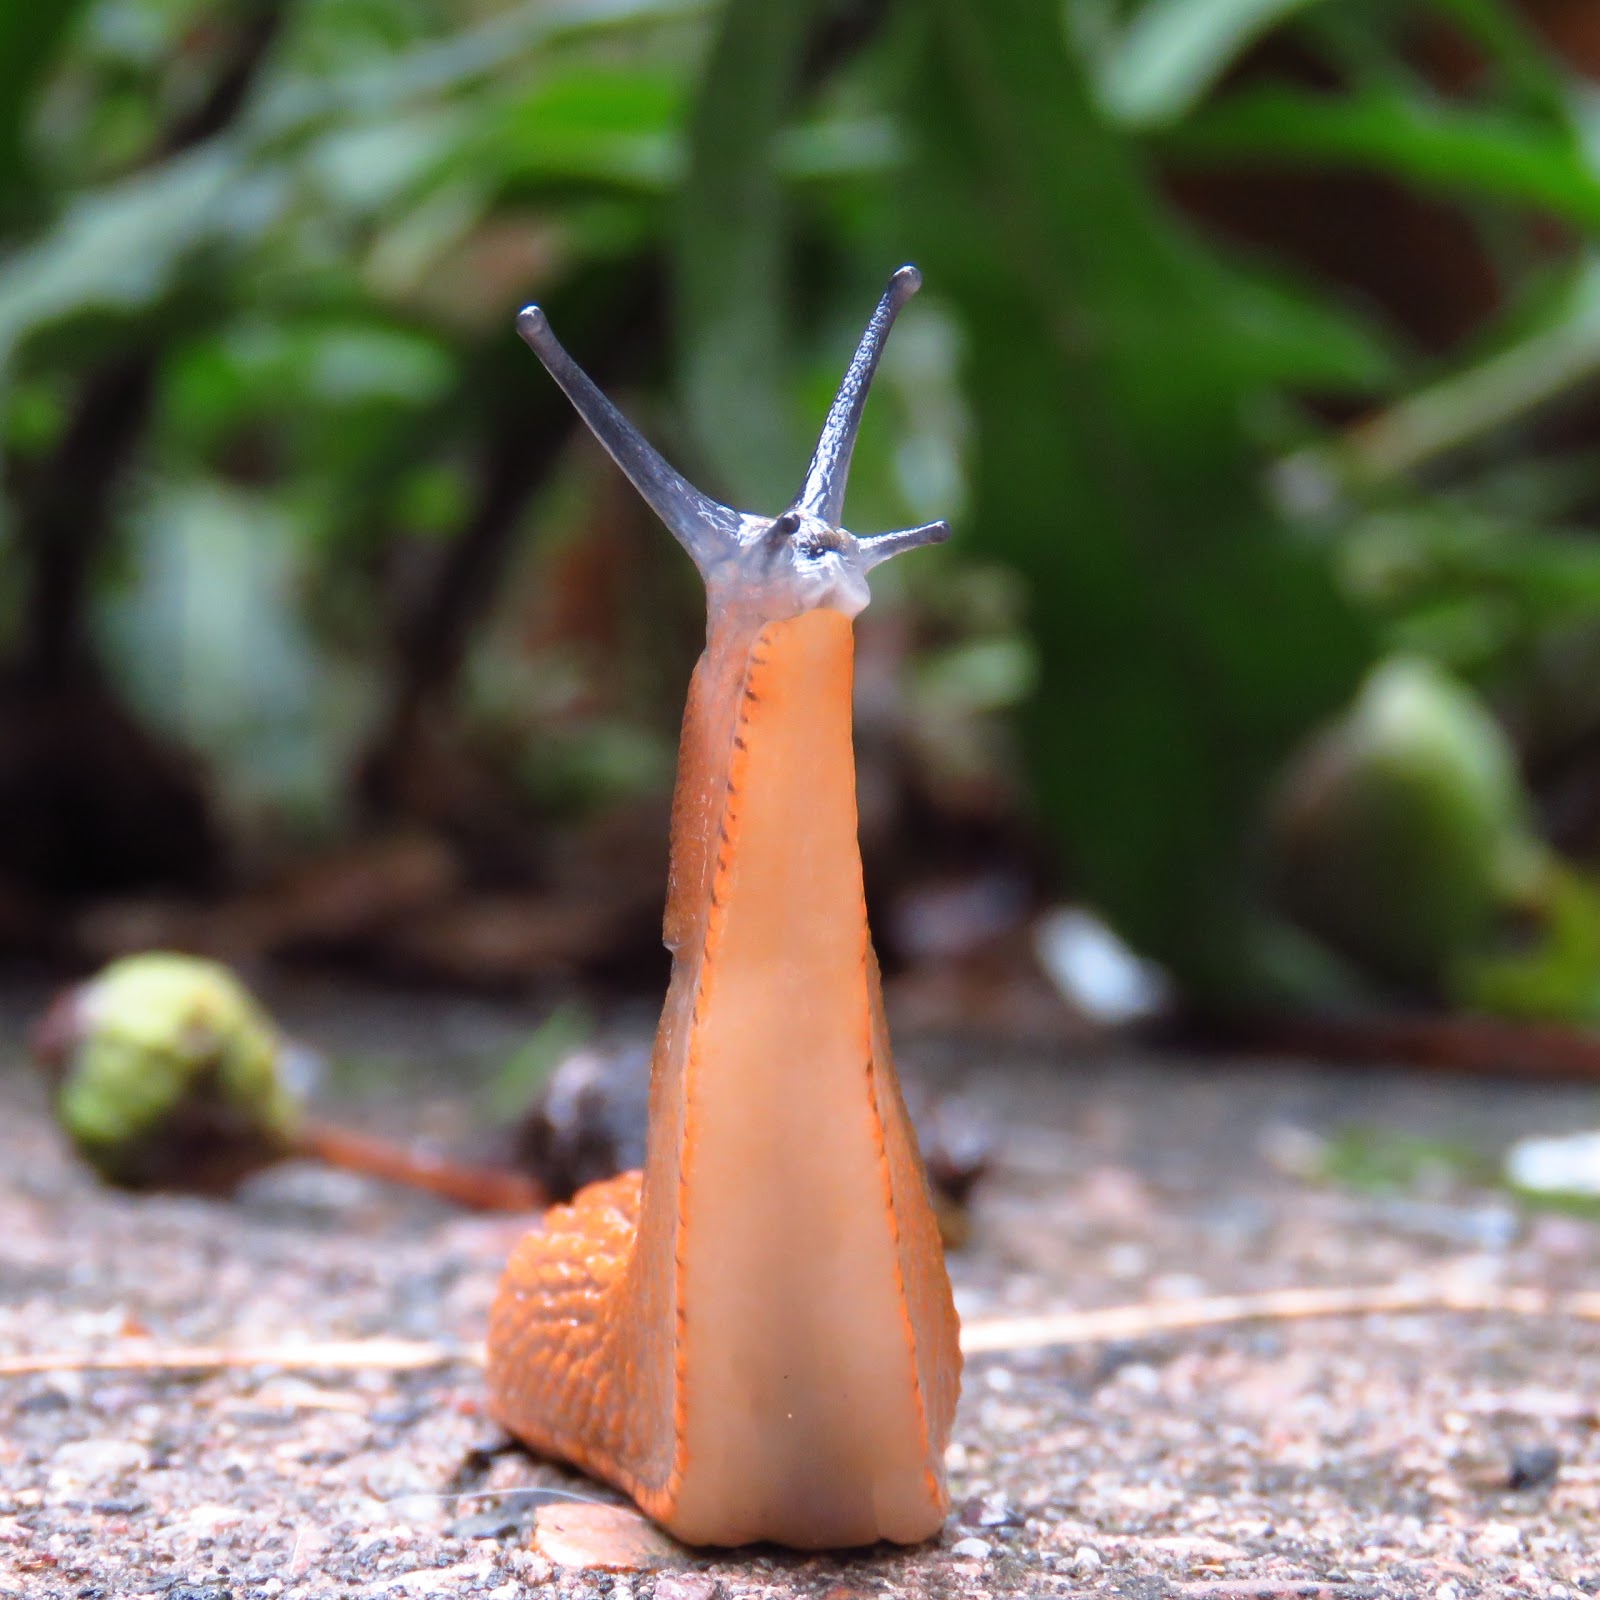 BugBlog: Slug standing up